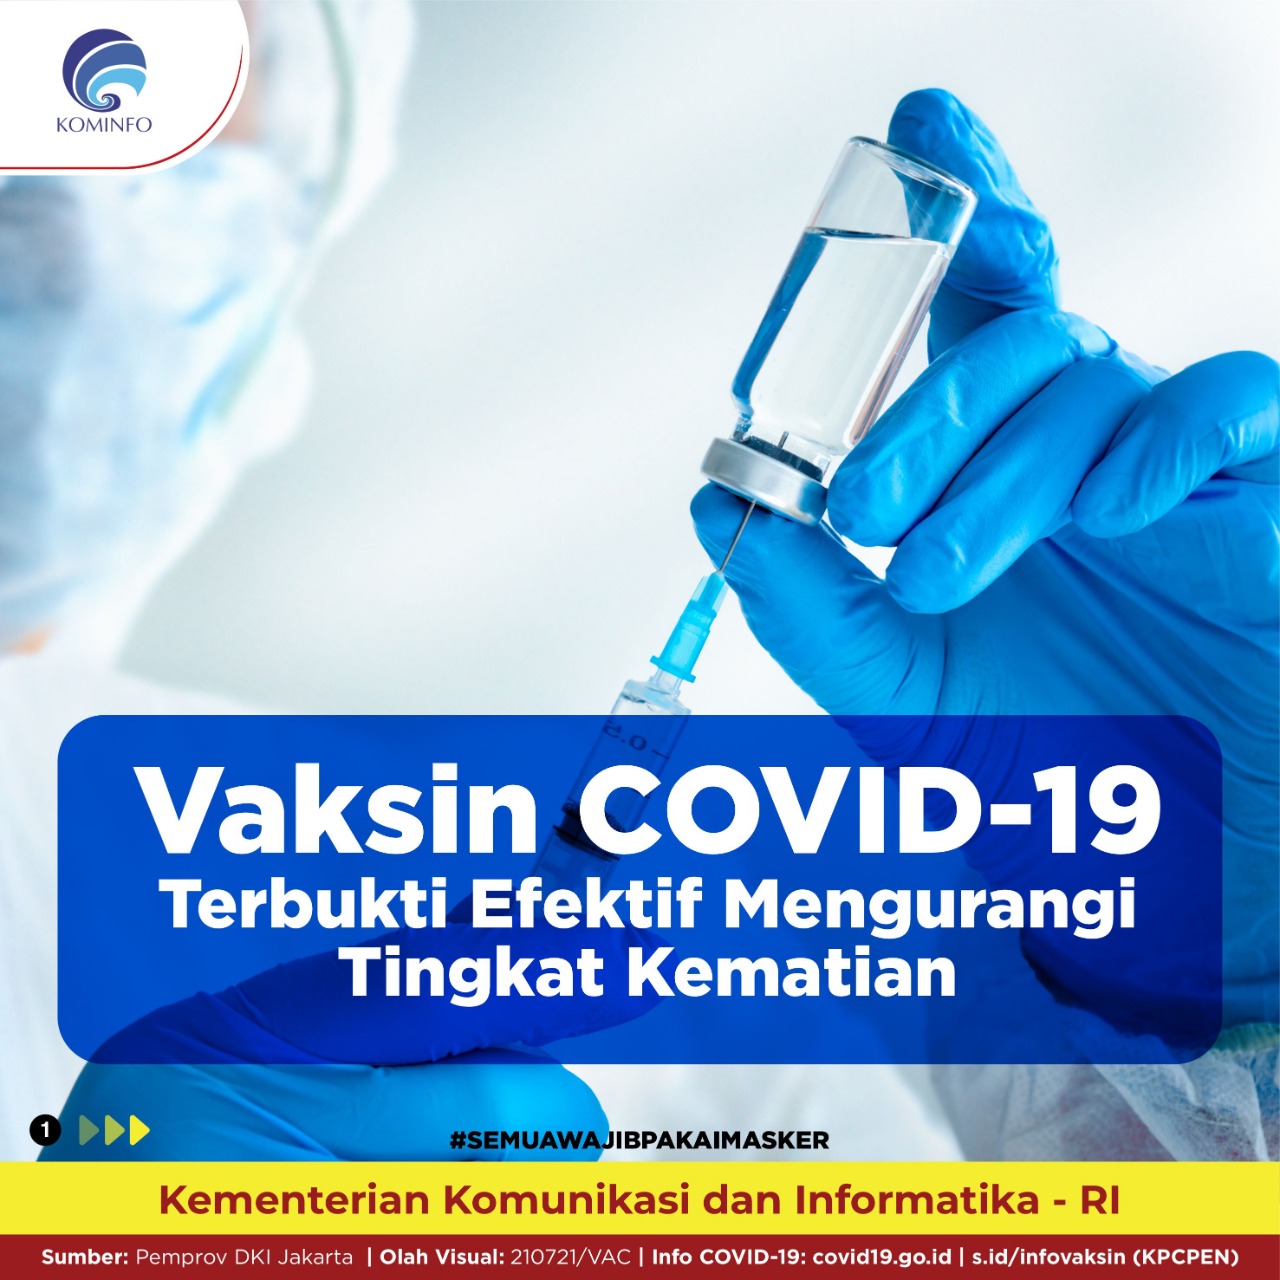 Sampel RS Buktikan Vaksinasi Dosis Lengkap Mengurangi Risiko Terburuk COVID-19 Hingga Kematian